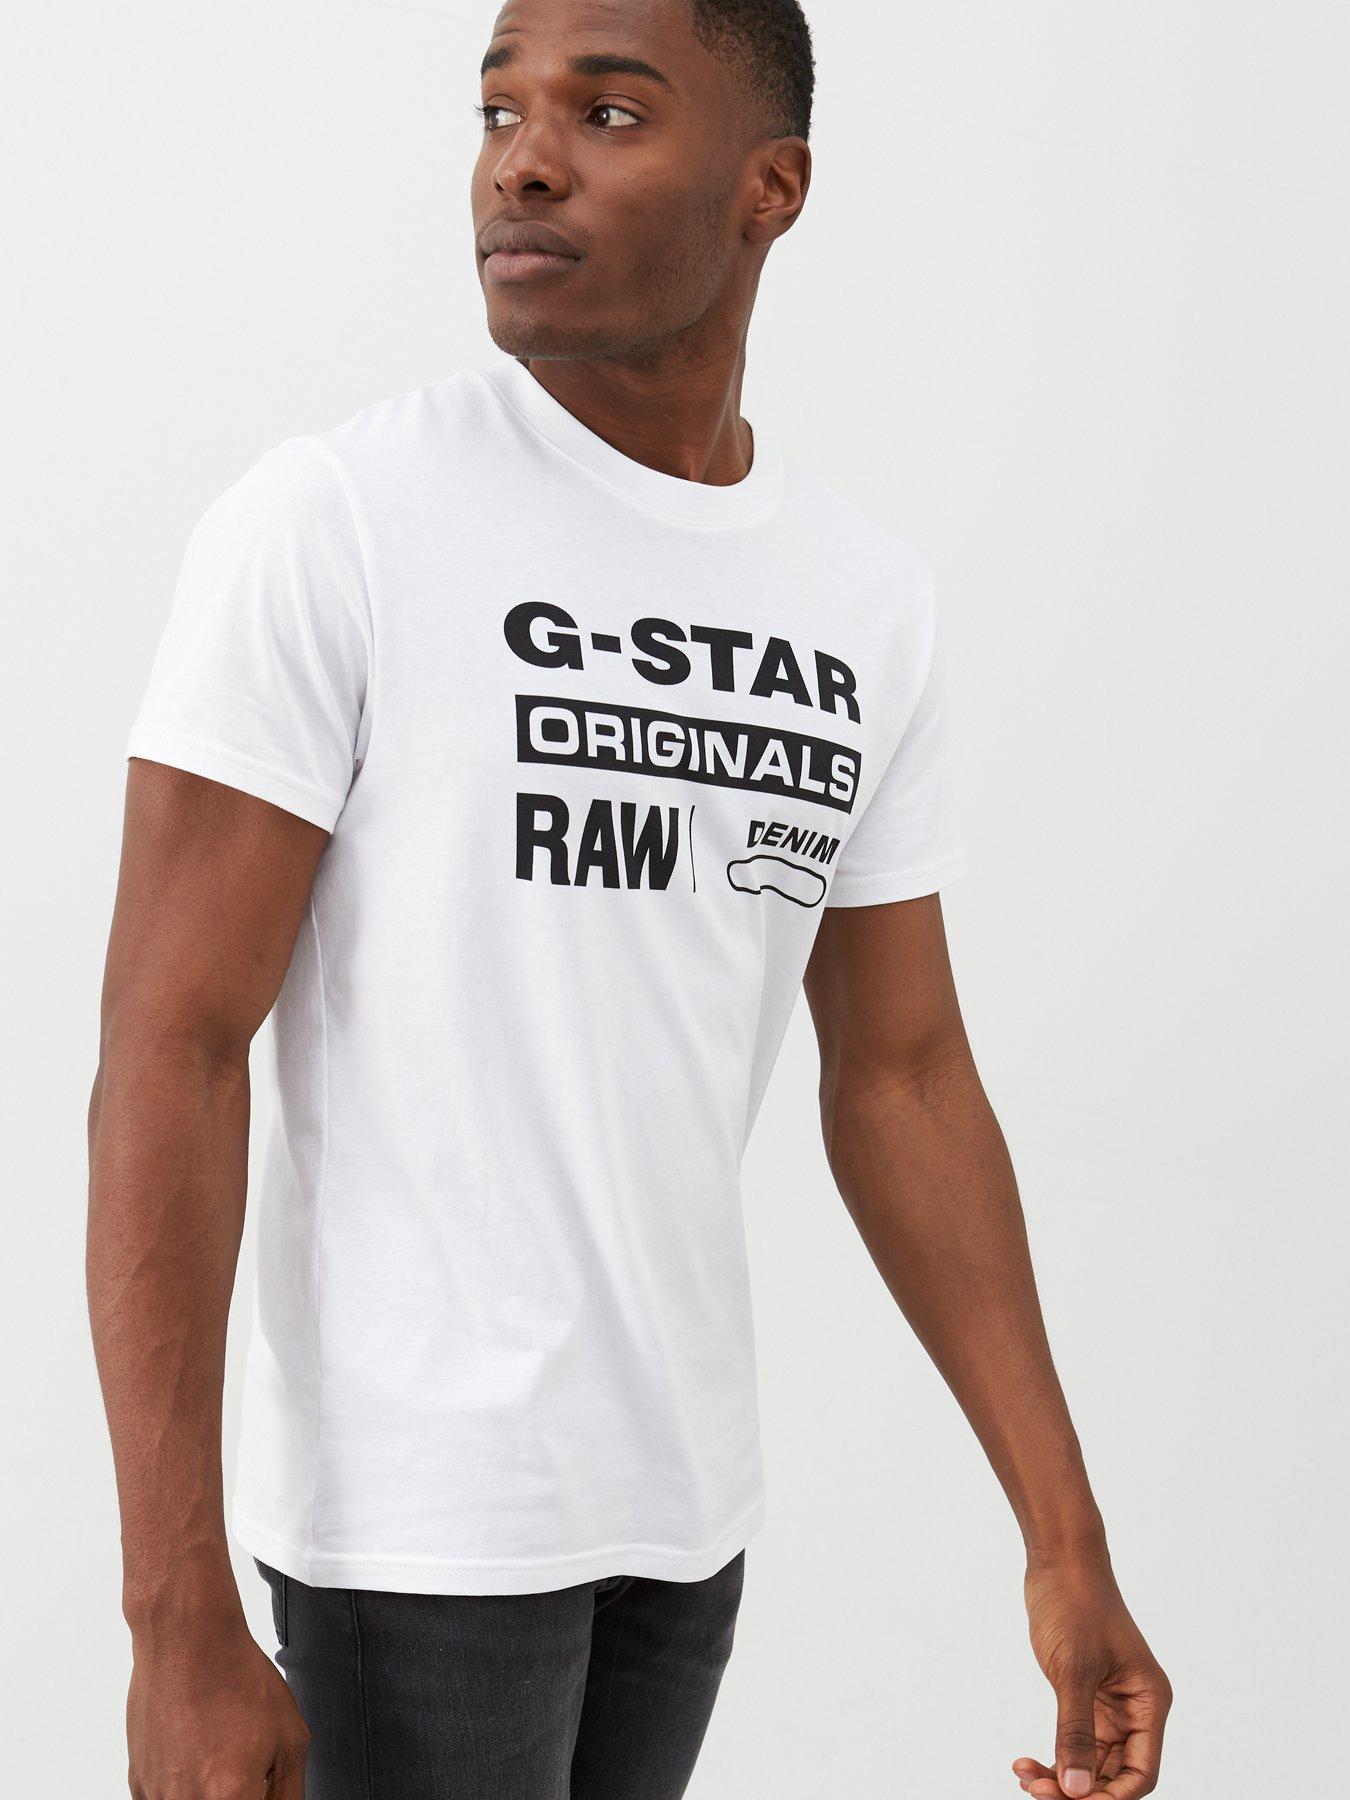 g star raw for men